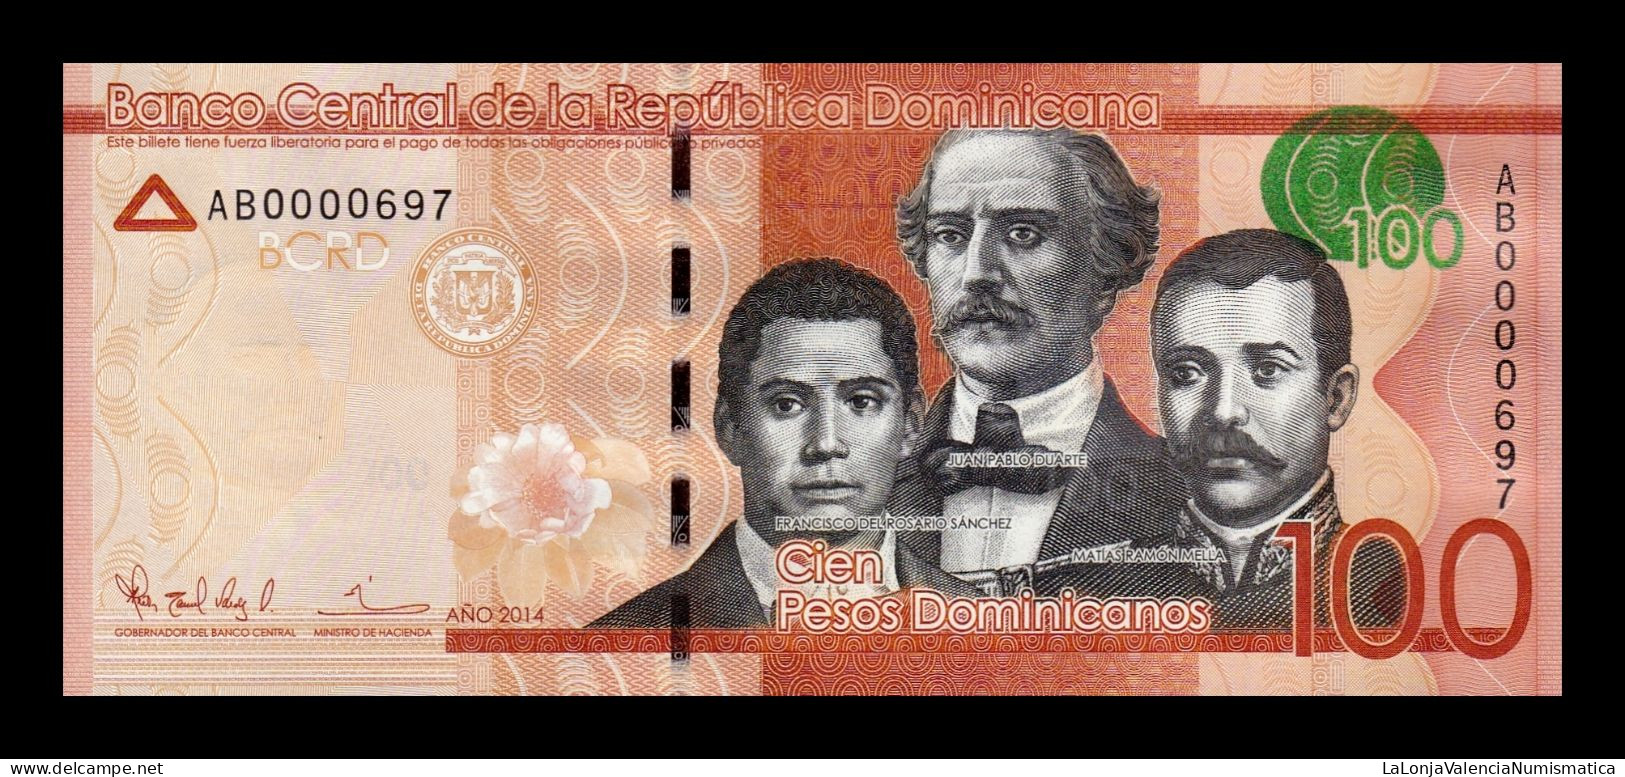 República Dominicana 100 Pesos Dominicanos 2014 Pick 190a Low Serial 697 Sc Unc - República Dominicana